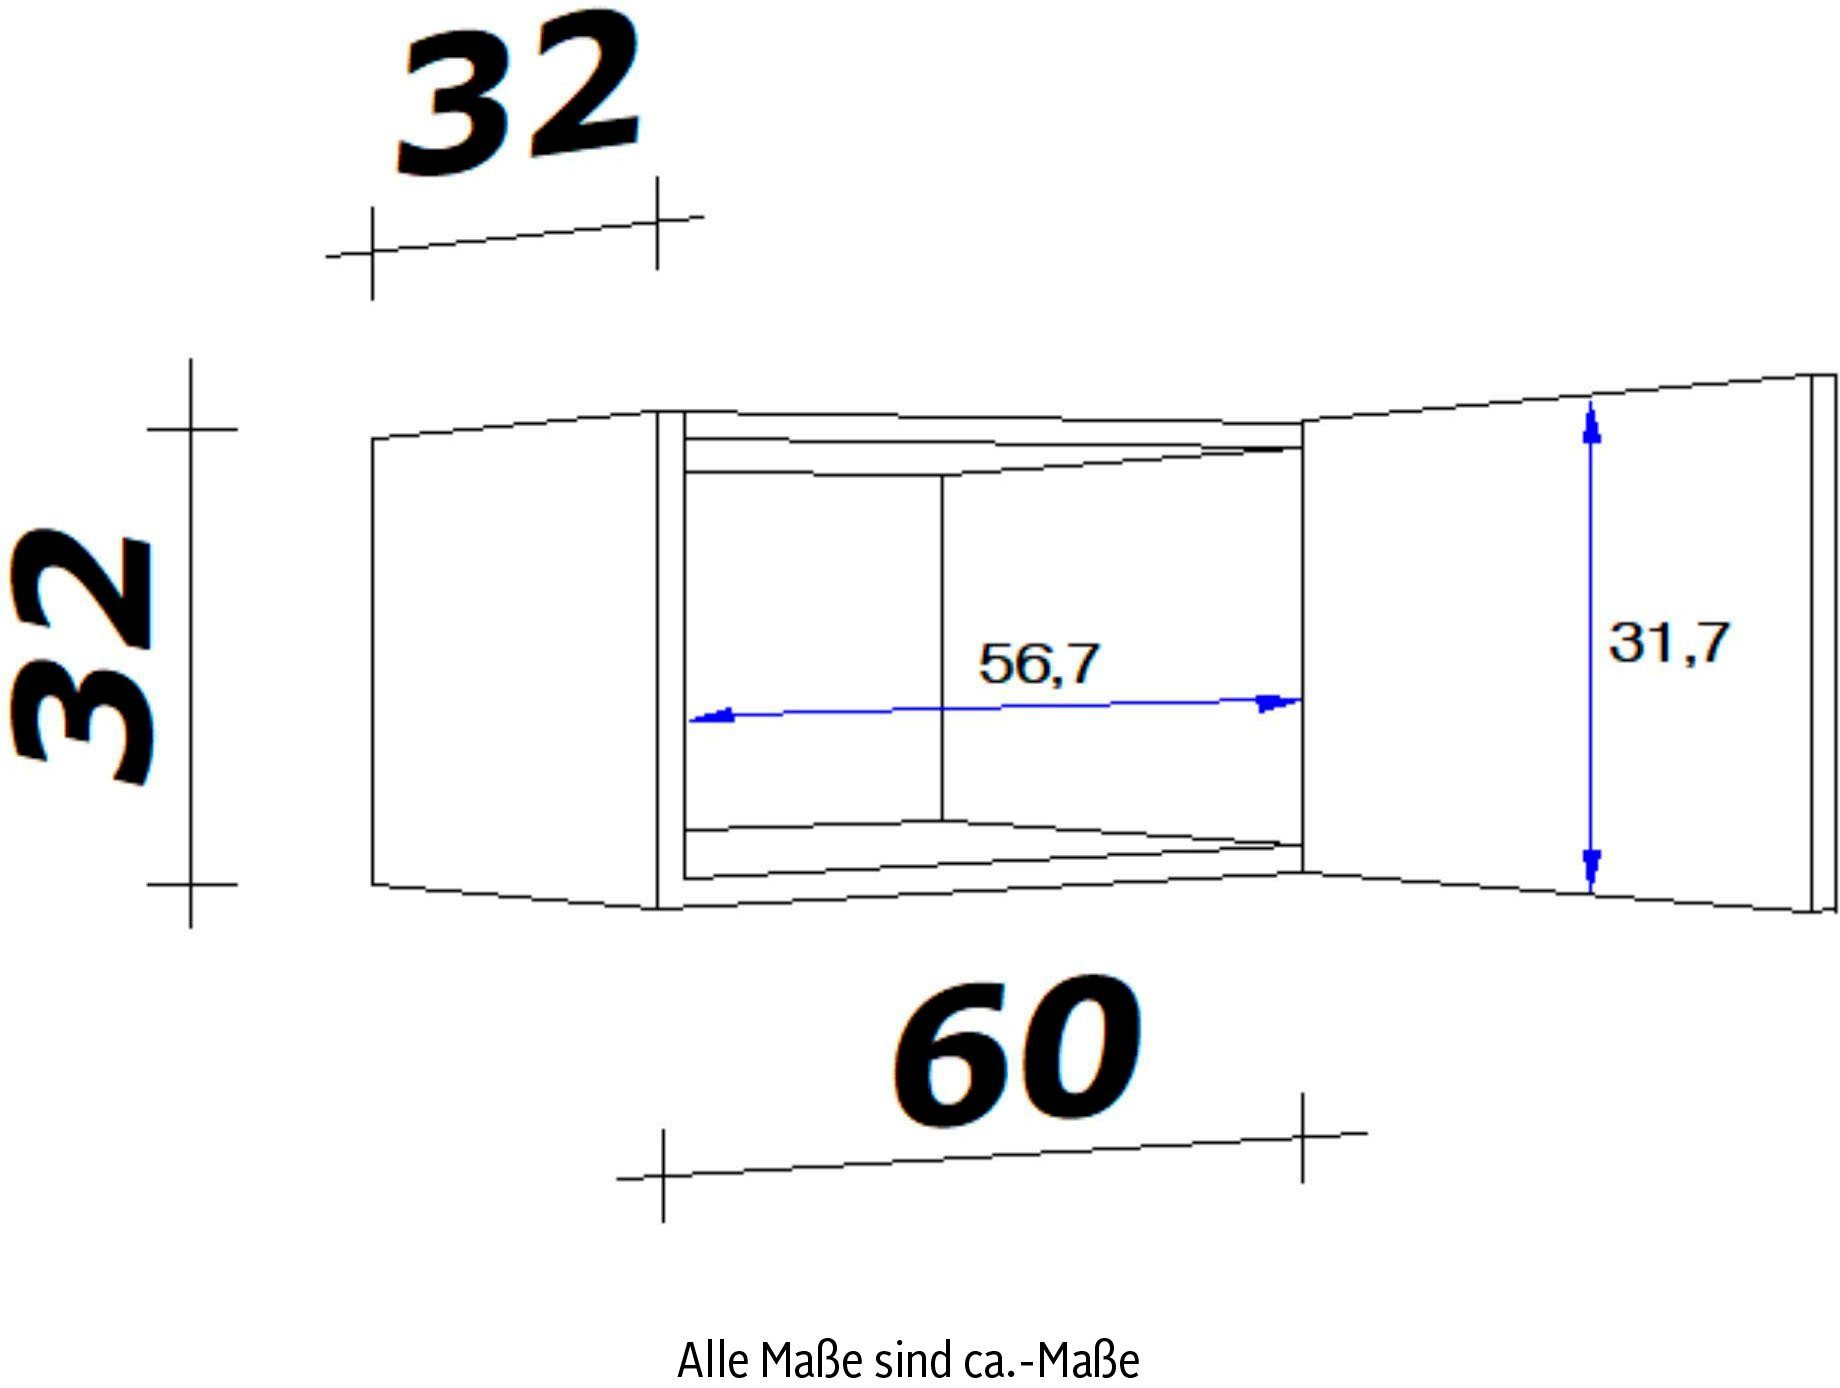 Flex-Well Kurzhängeschrank Vintea (B x x x x T) H 32 cm, Metallgriffen mit 60 32